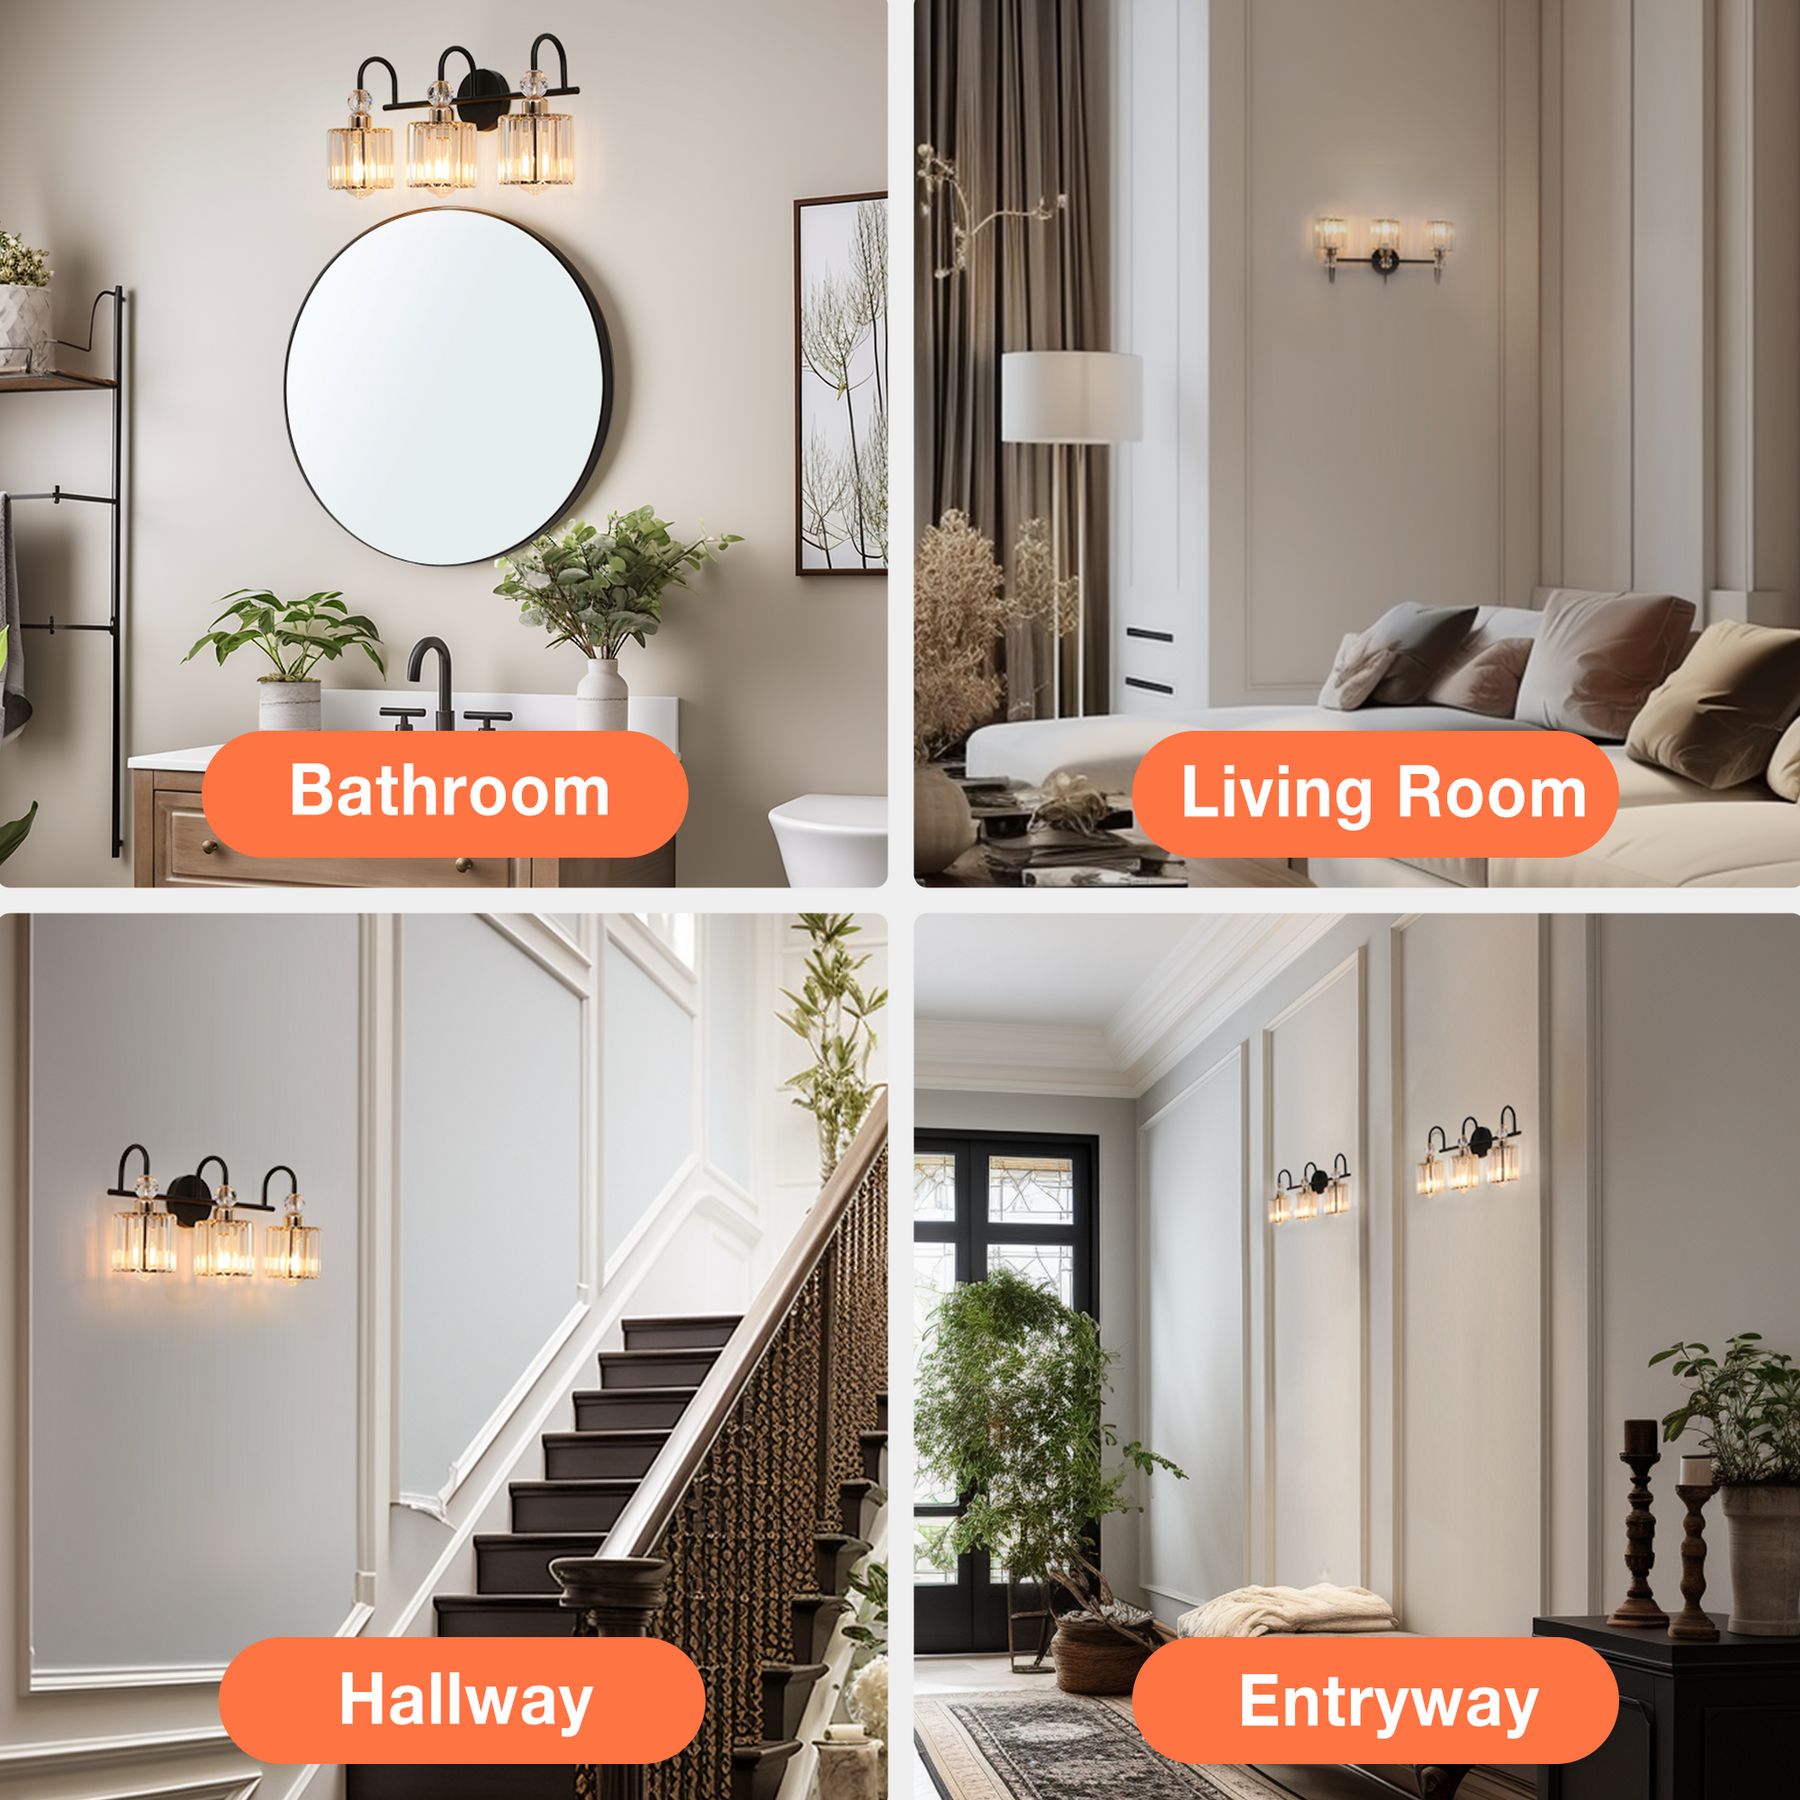 TaoTronics Black Gold Crystal 3-Light Vanity Lighting, Bathroom Vanity Lights Fixtures Over Mirror